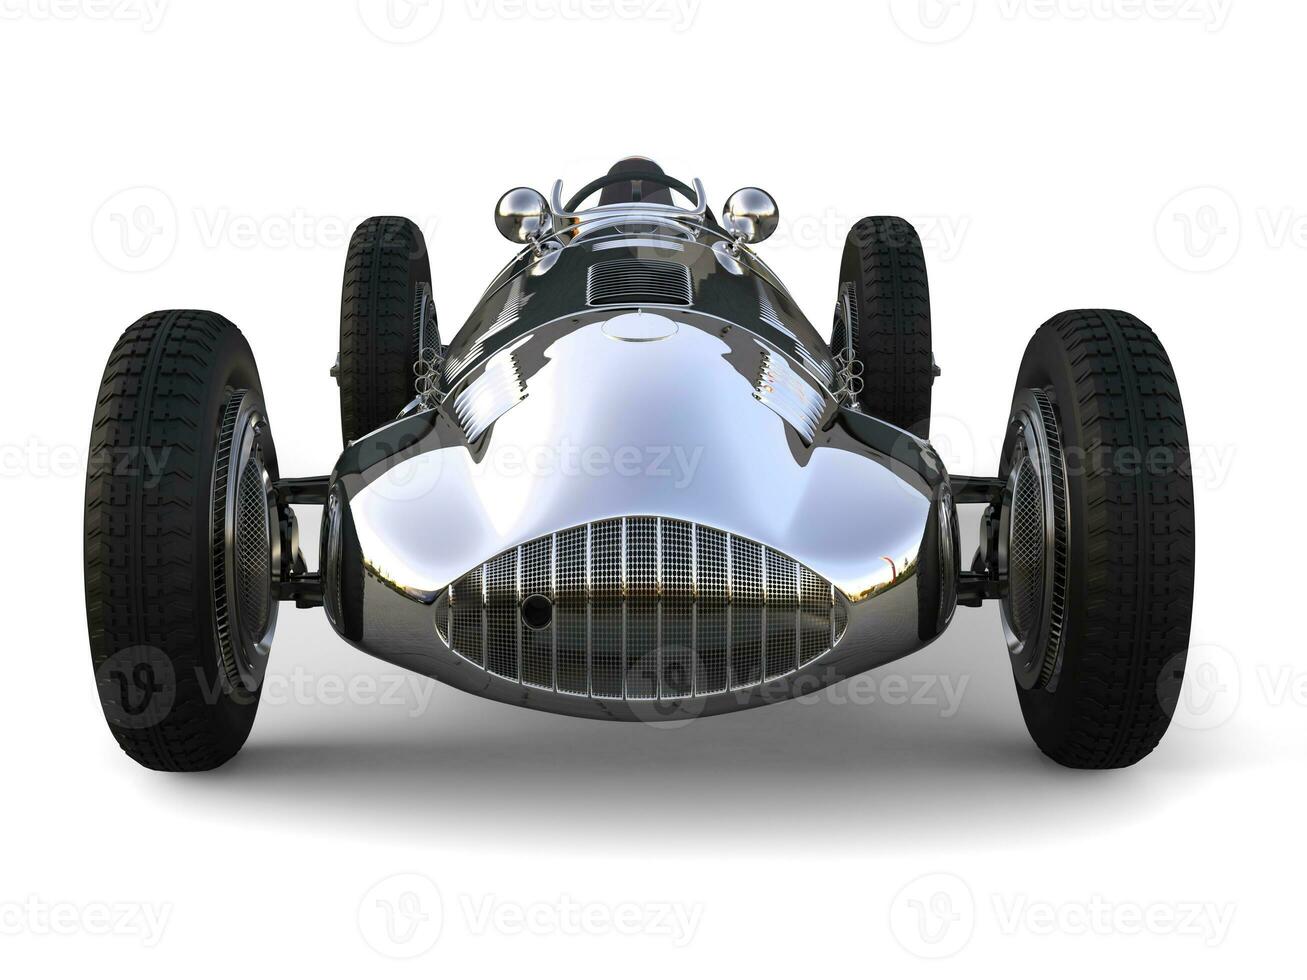 Silver vintage race sports car - front view photo